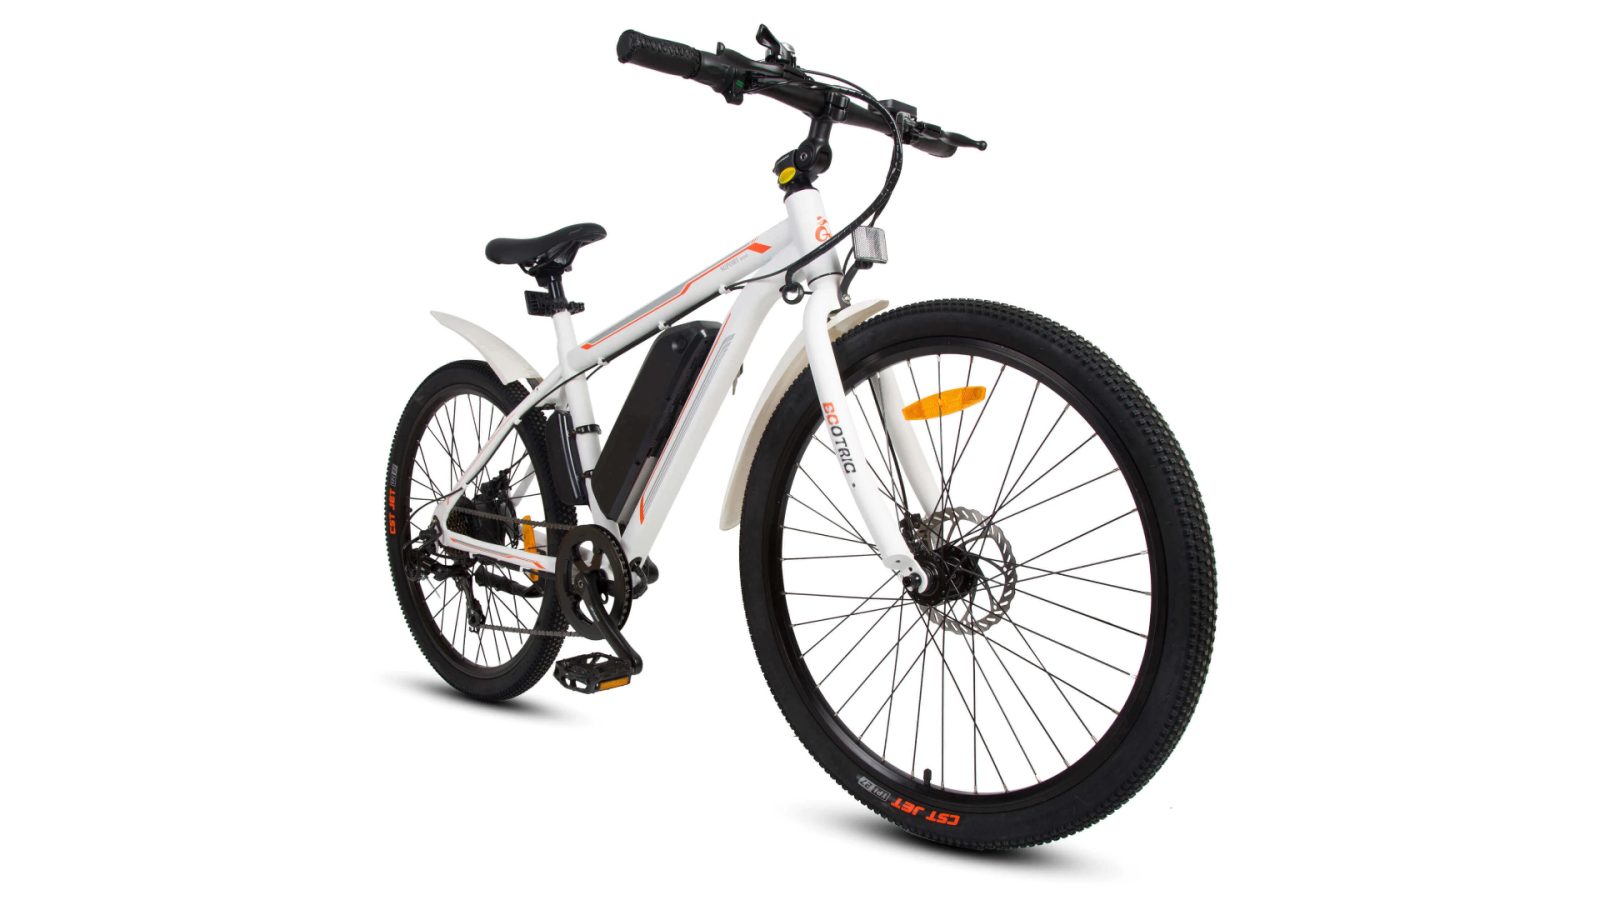 https://electrek.co/wp-content/uploads/sites/3/2021/07/ecotric-vortex-e-bike.jpg?quality=82&strip=all&w=1600